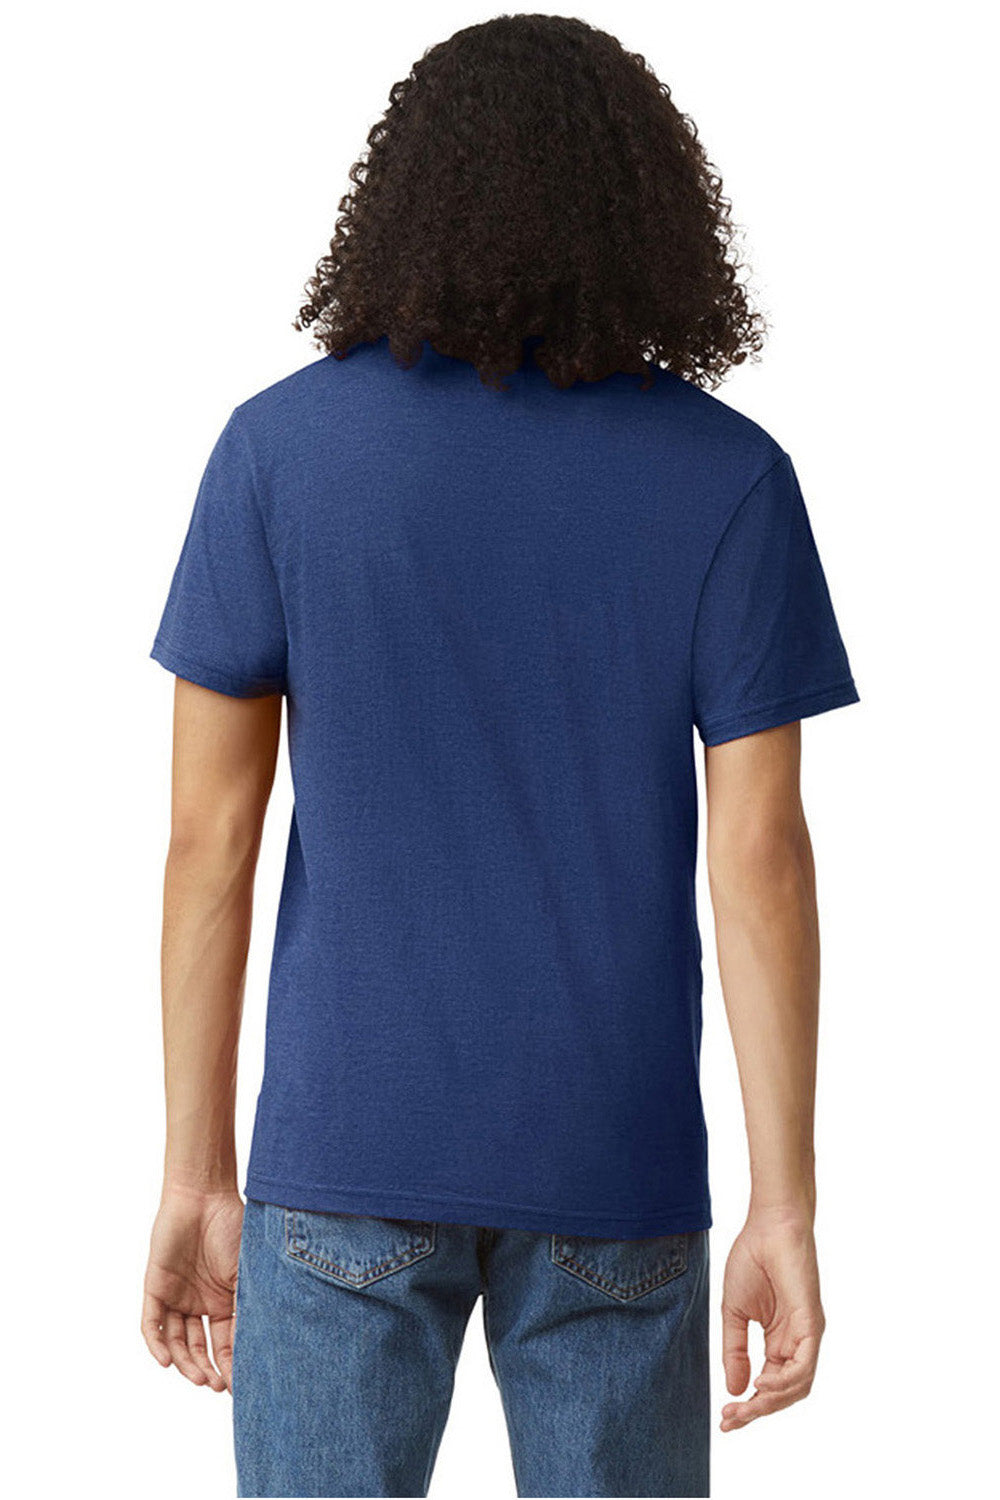 American Apparel 2006CVC Mens CVC Short Sleeve V-Neck T-Shirt Heather Indigo Blue Model Back